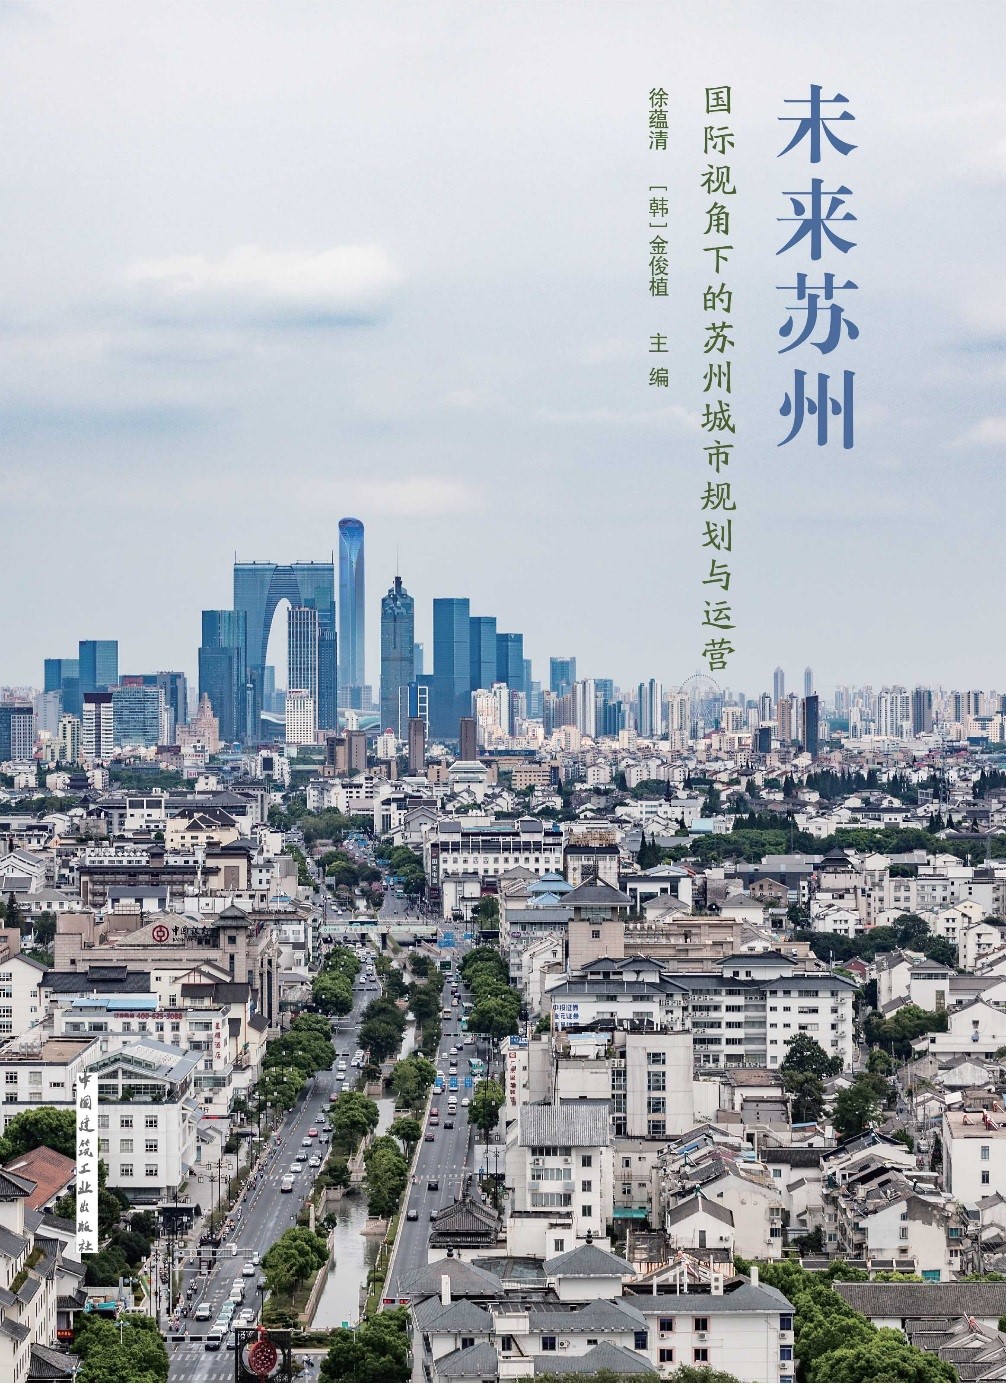 Future Suzhou: XJTLU scholars discuss future cities in new book